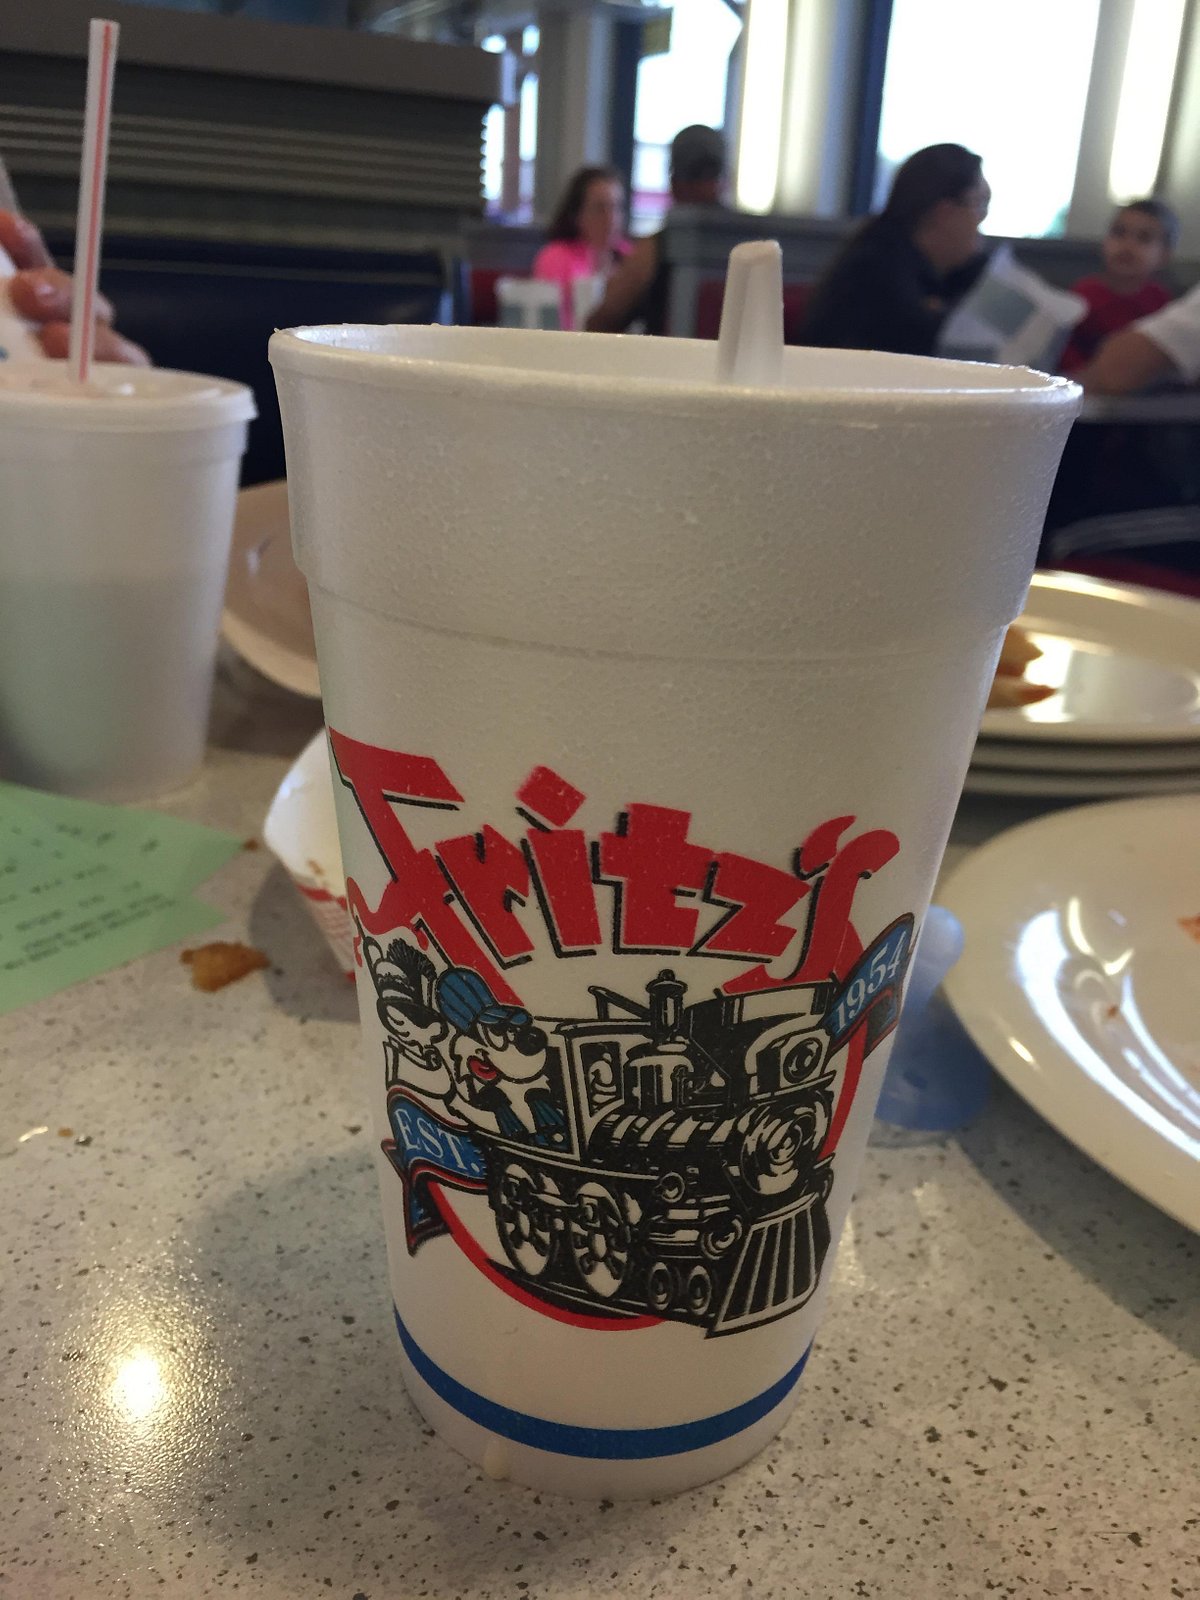 SIDE POCKETS, Kansas City - Restaurant Reviews, Photos & Phone Number -  Tripadvisor